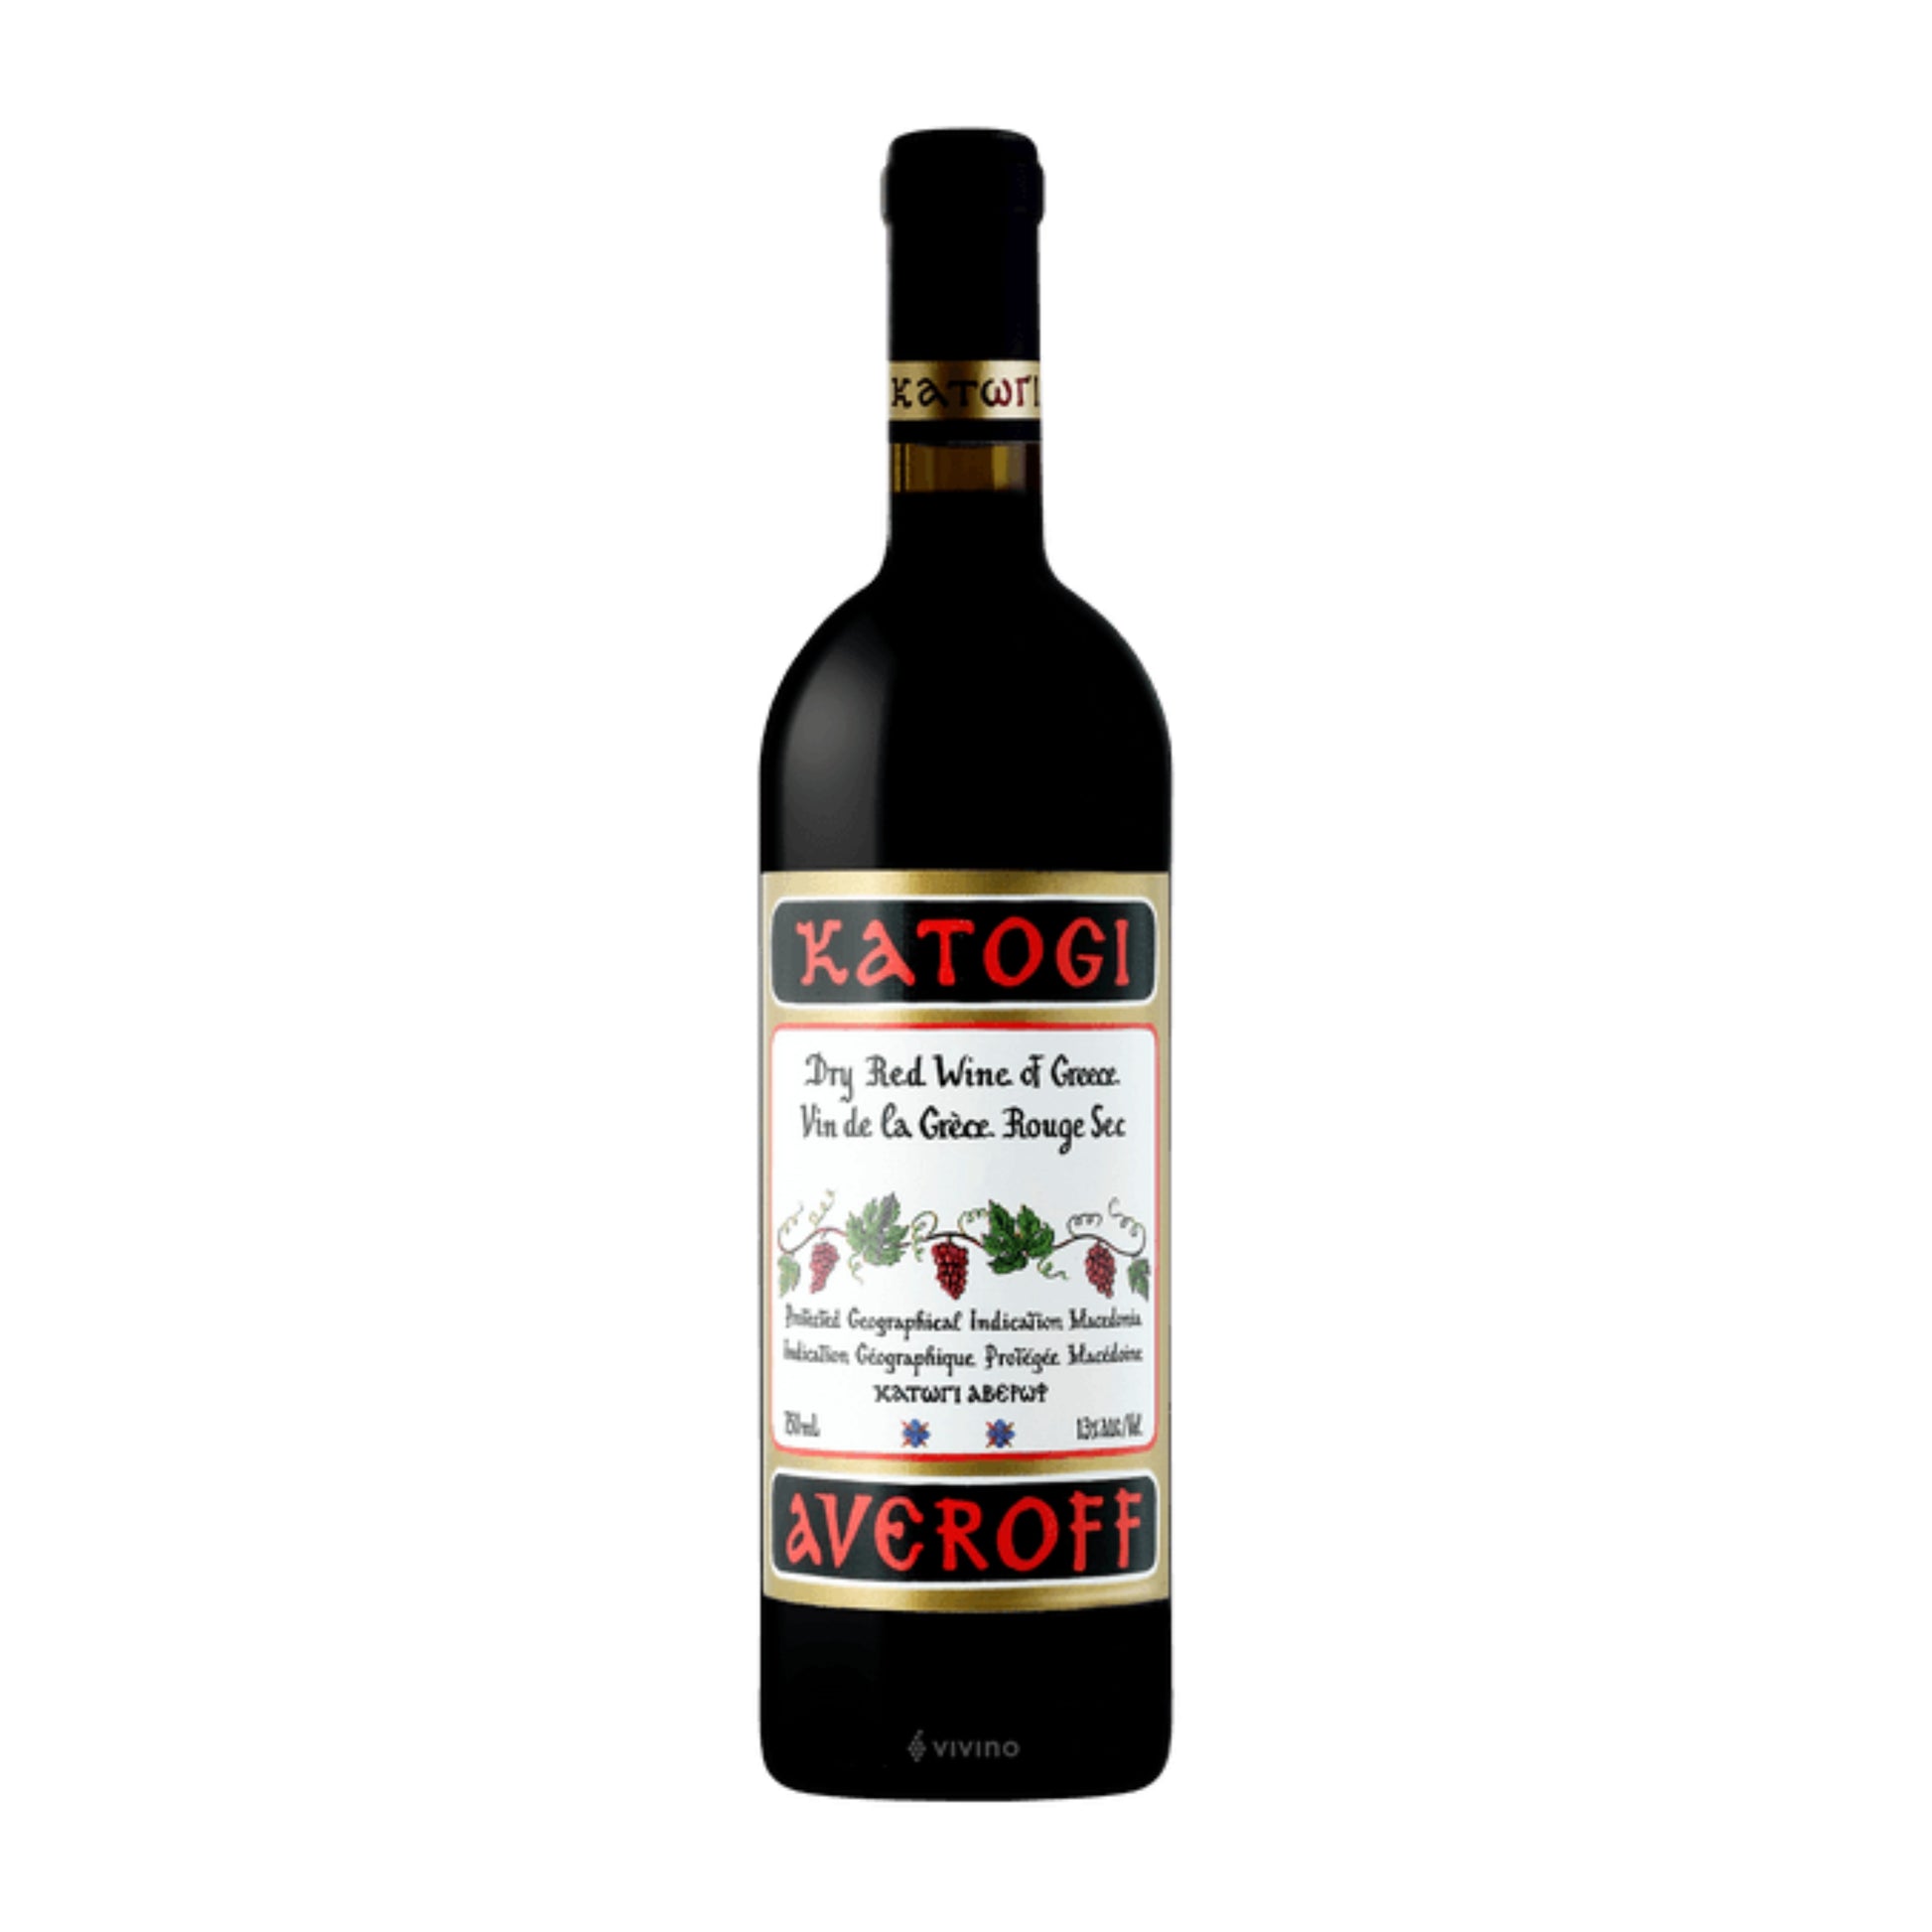 griechische-lebensmittel-griechische-produkte-rotwein-katogi-750ml-katogi-averoff